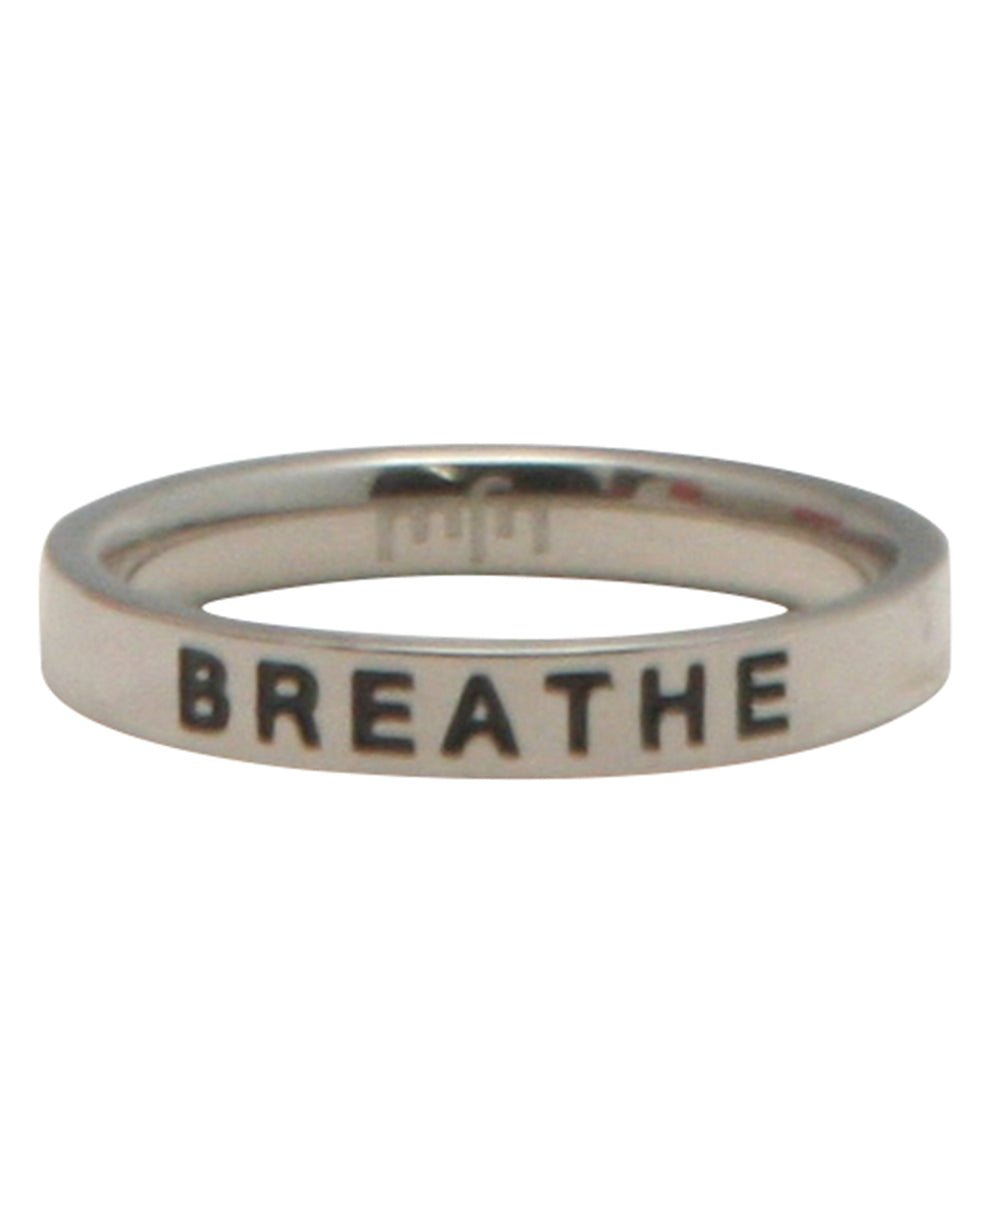 Inspirational Ring, Breathe - Size 6